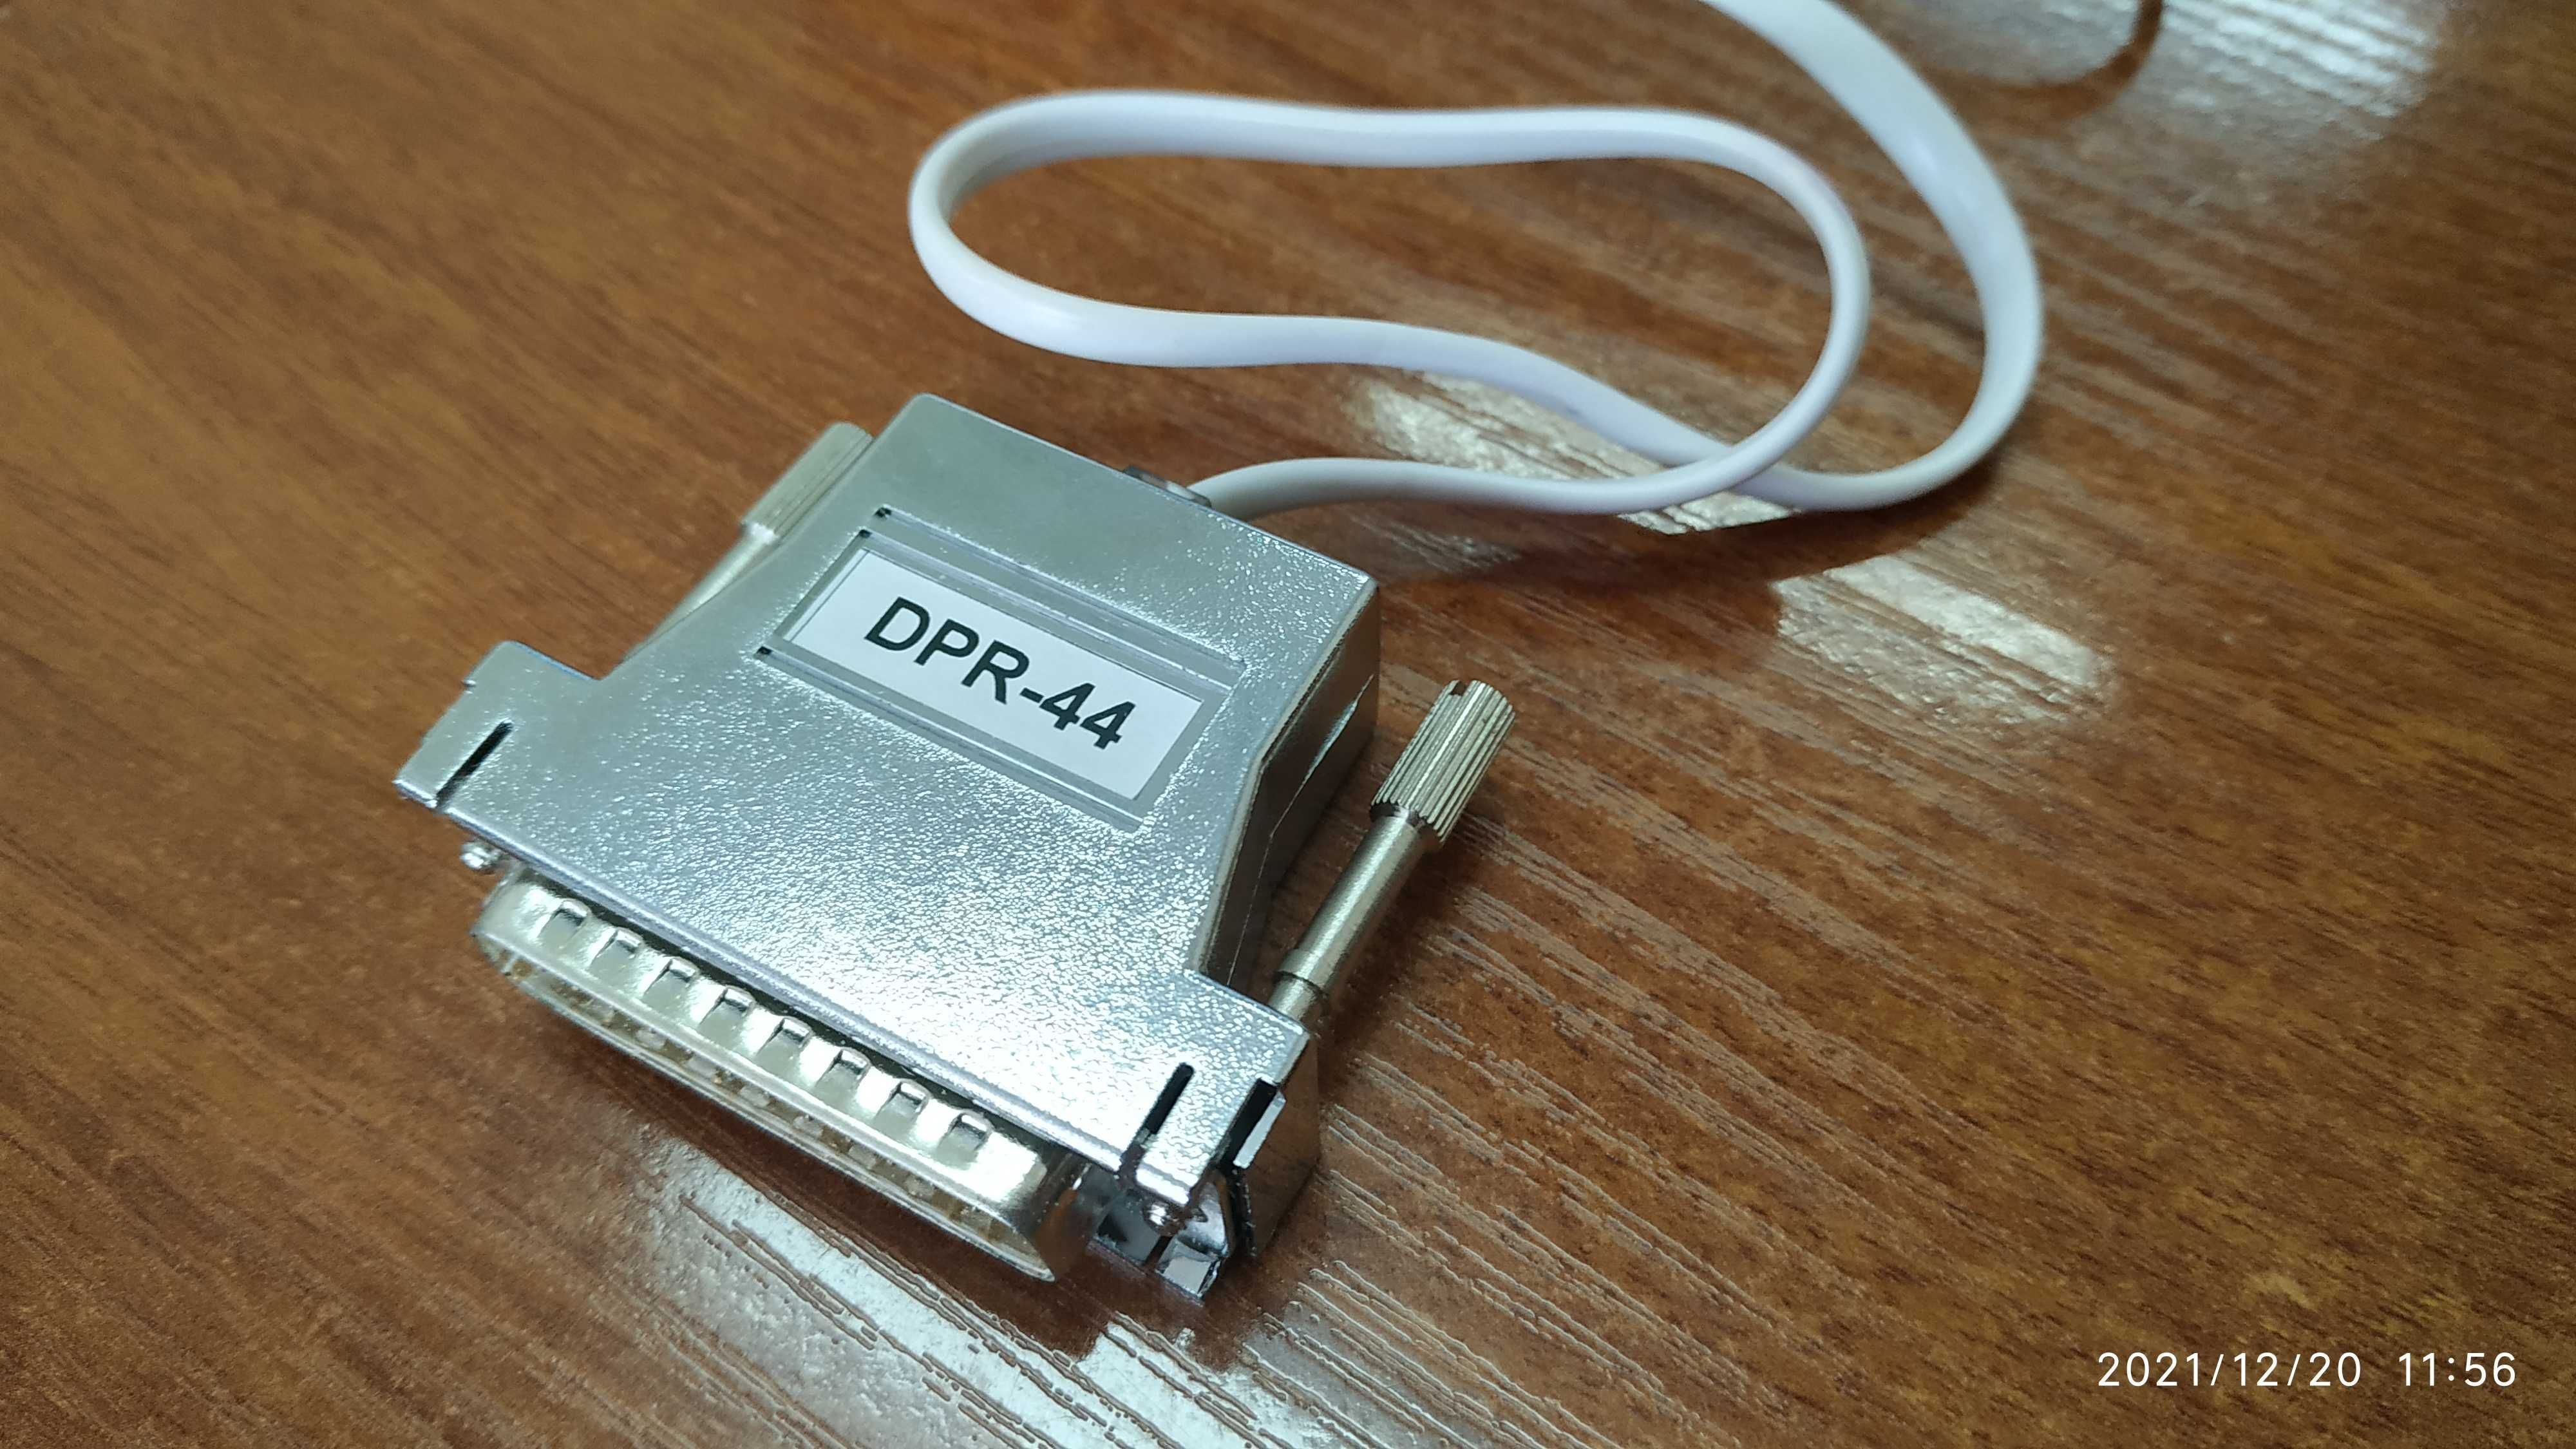 LPT Программатор DPR44 Pima для радиостанций Conex PIMA и SAT-N (8,9)